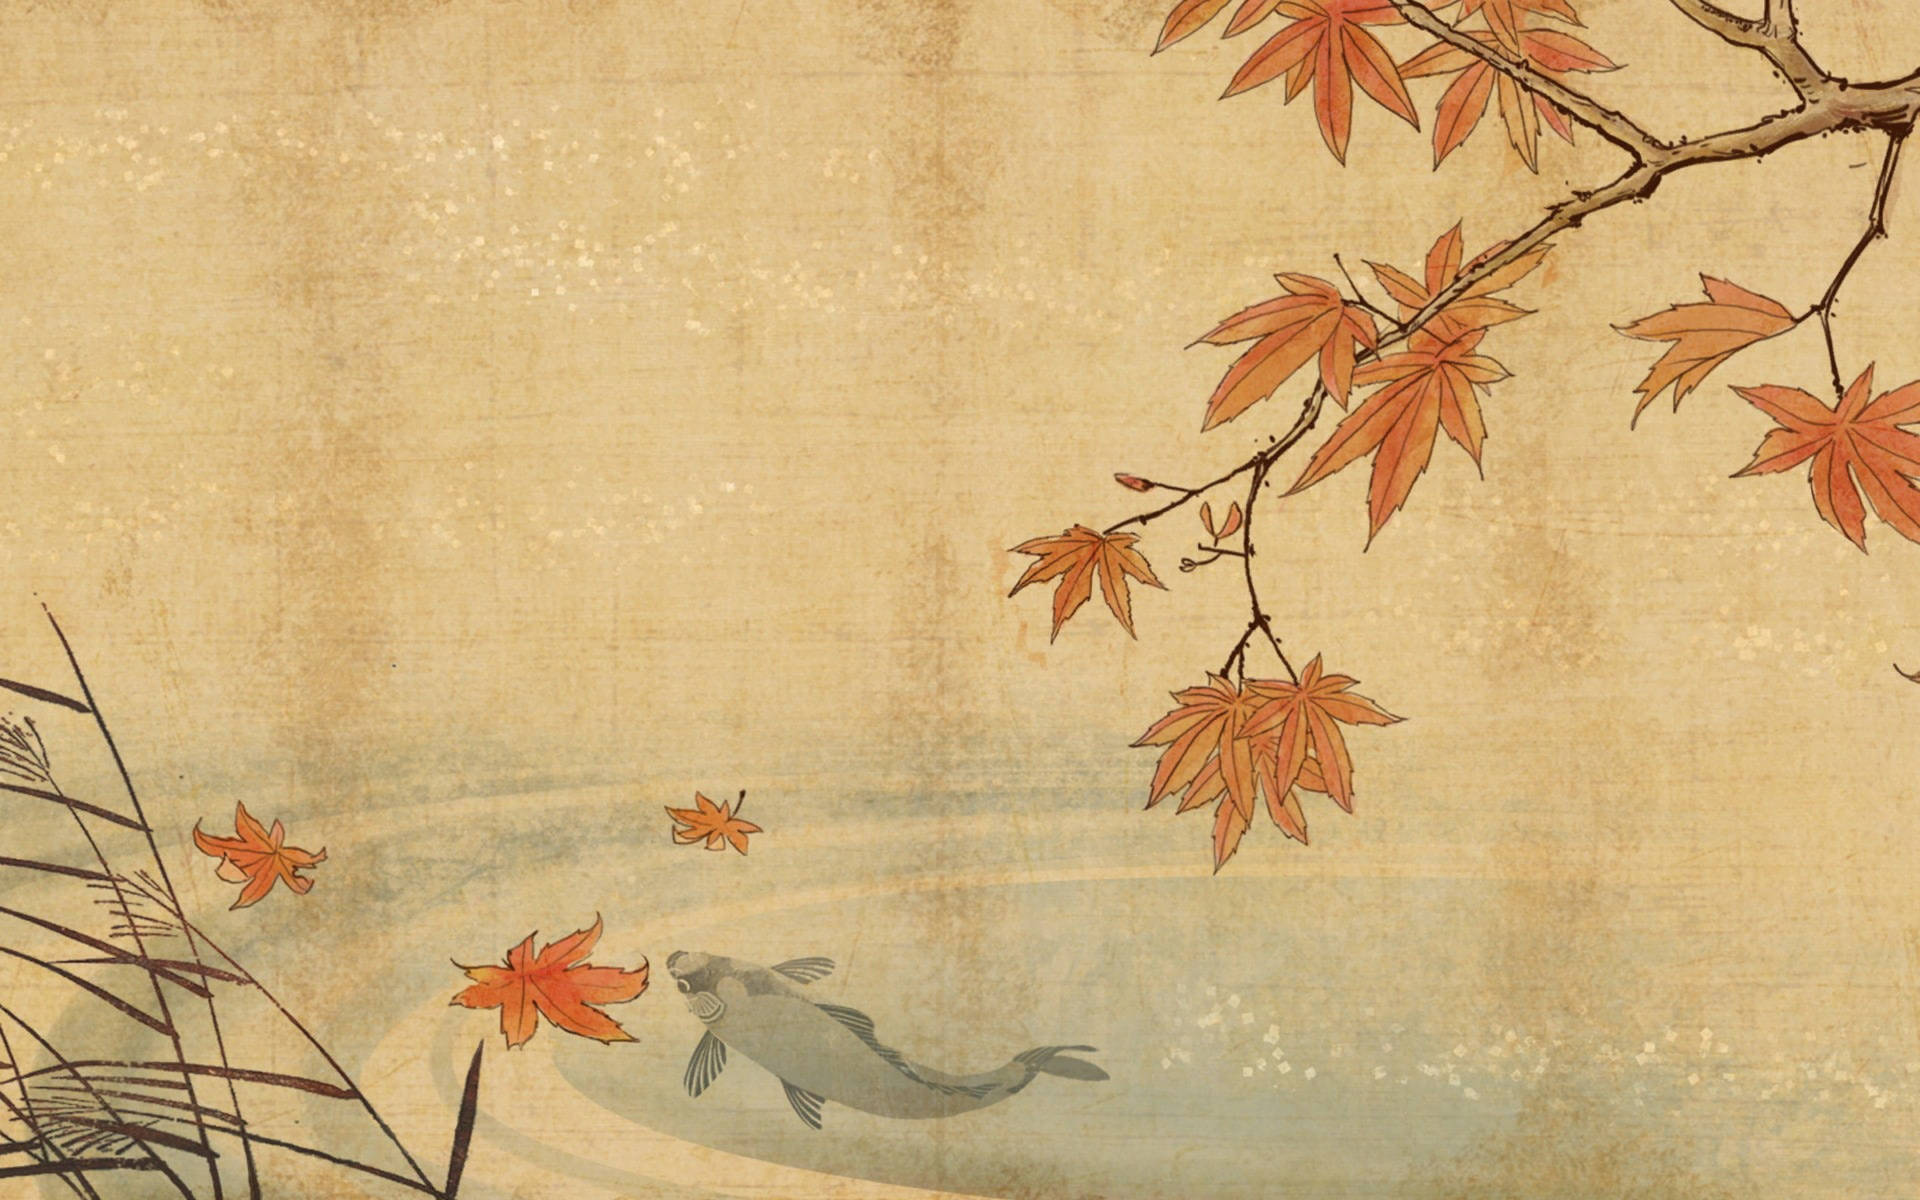 Zen Shogun 2 Inspired Art